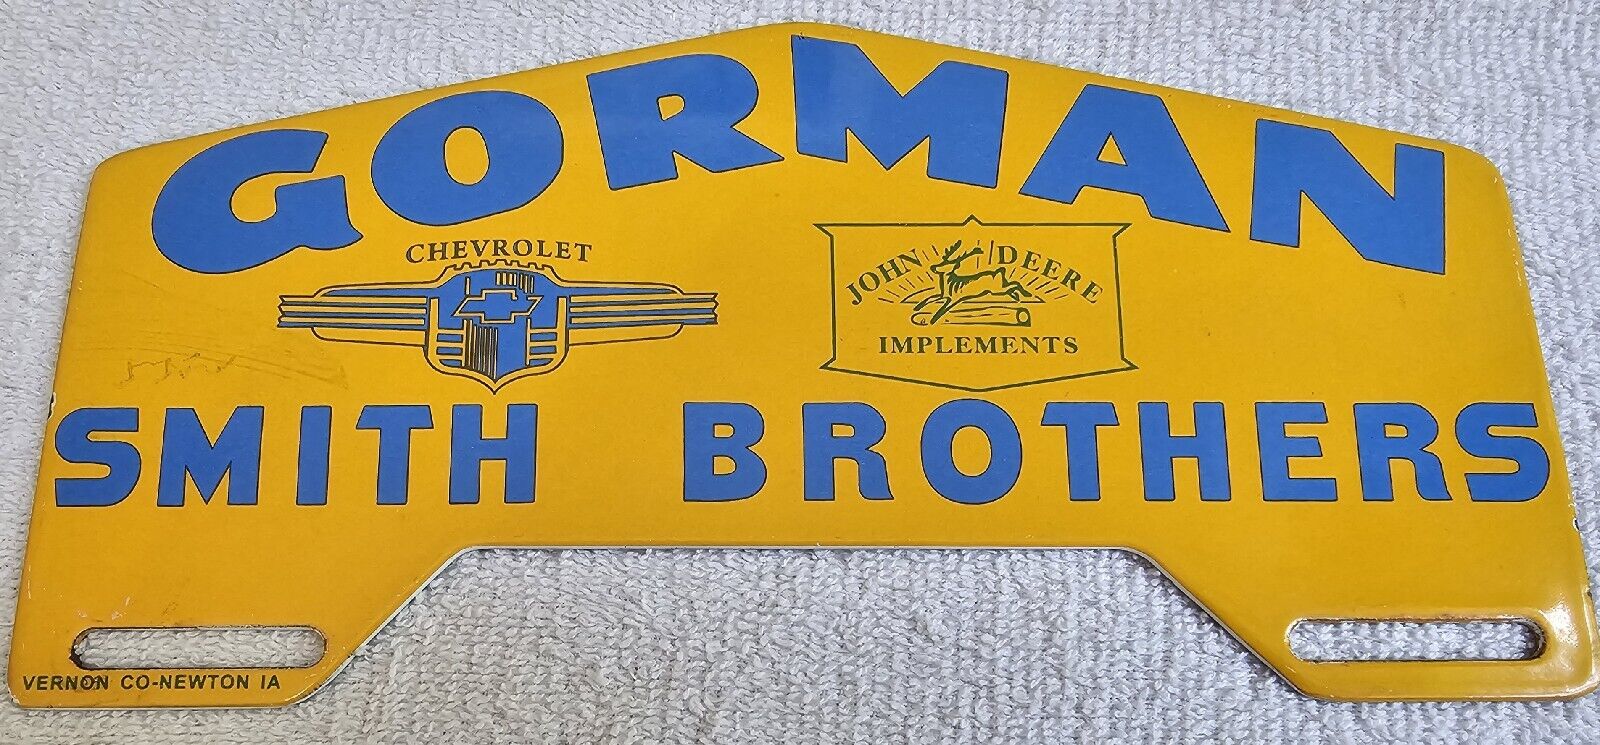 Vintage Gorman Smith Bros. John Deere Implements Chevrolet Porcelain Sign Topper